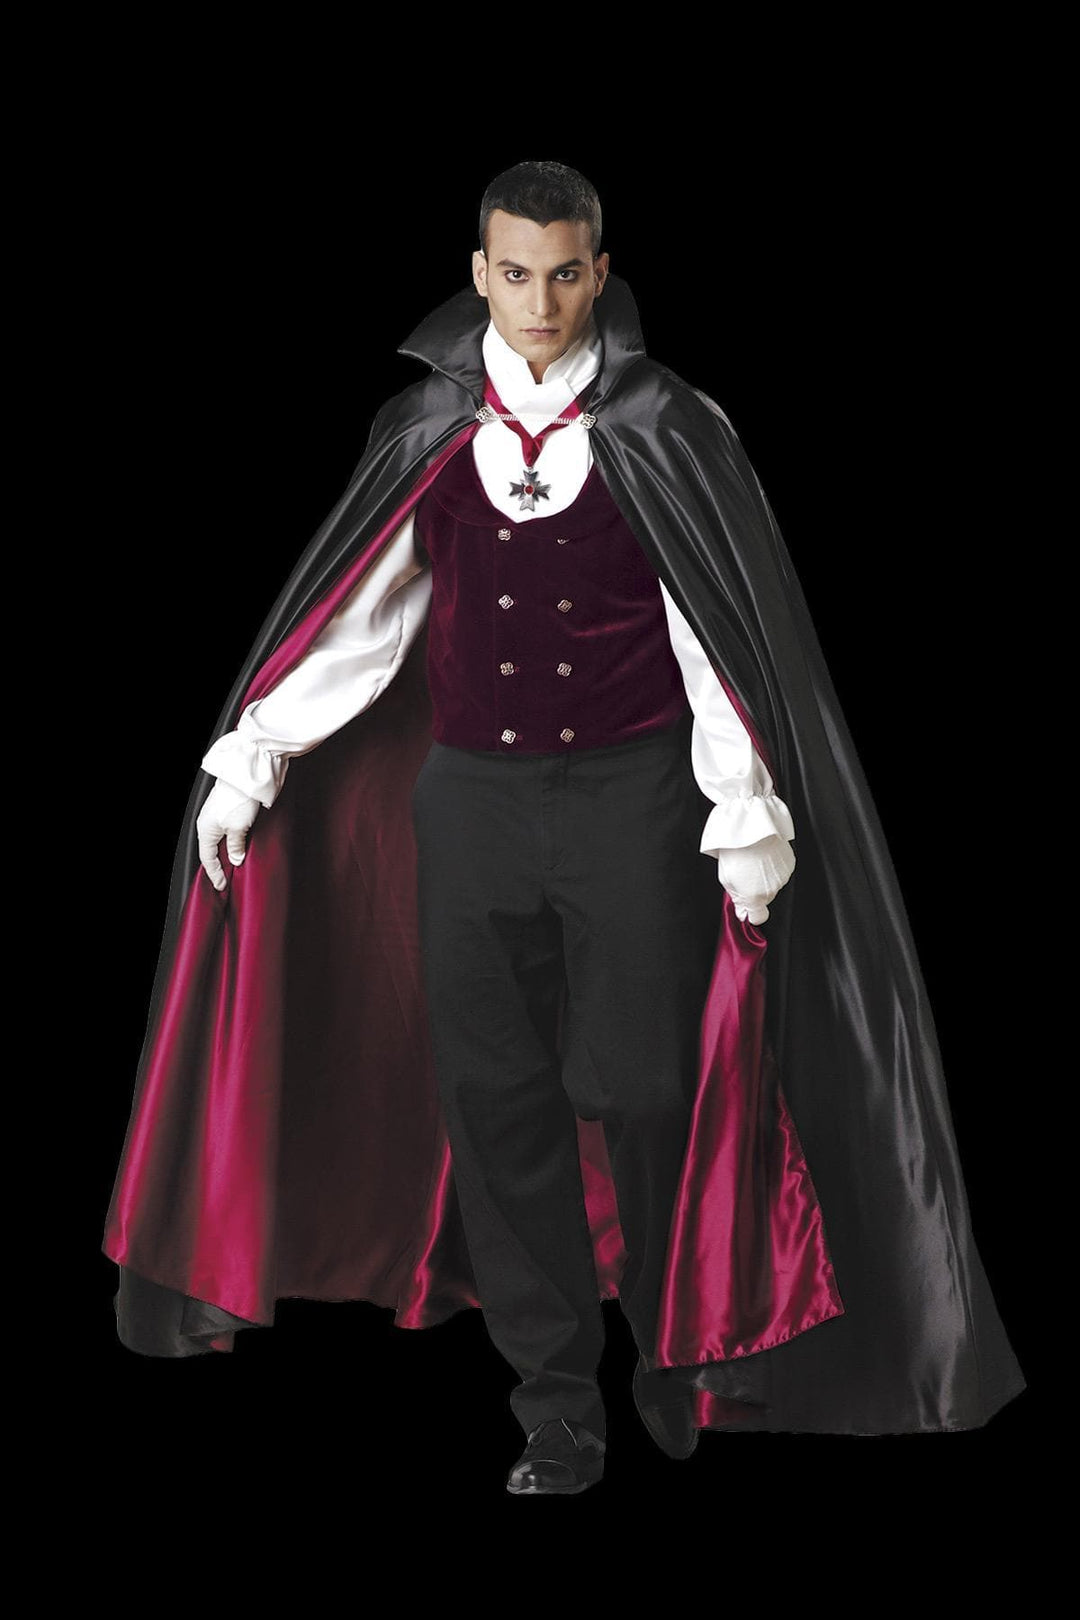 Horror Gothic Costume - Versailles Vampiress - HORROR COSTUMES MONSTERS